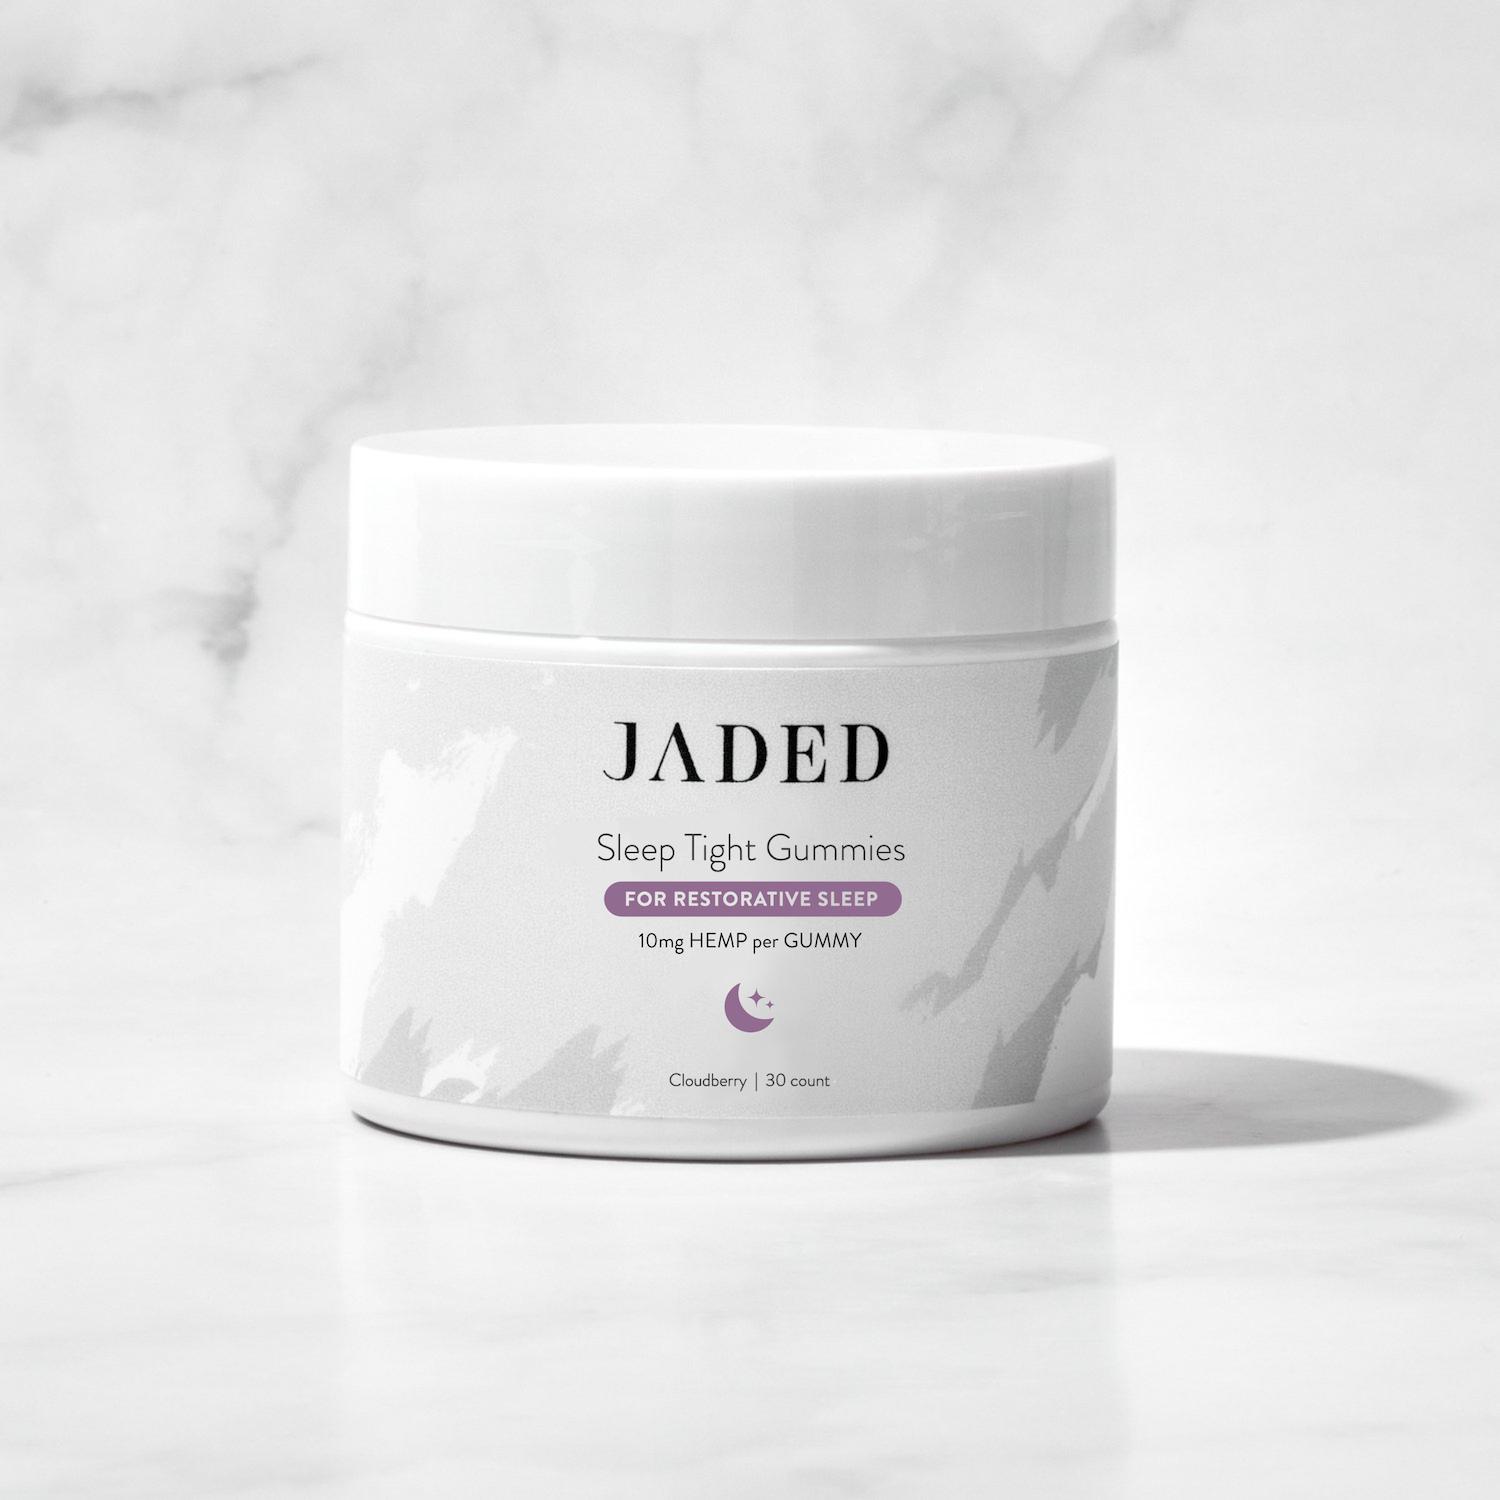 JADED Sleep Tight Hemp Gummies Cloudberry 30ct Jar